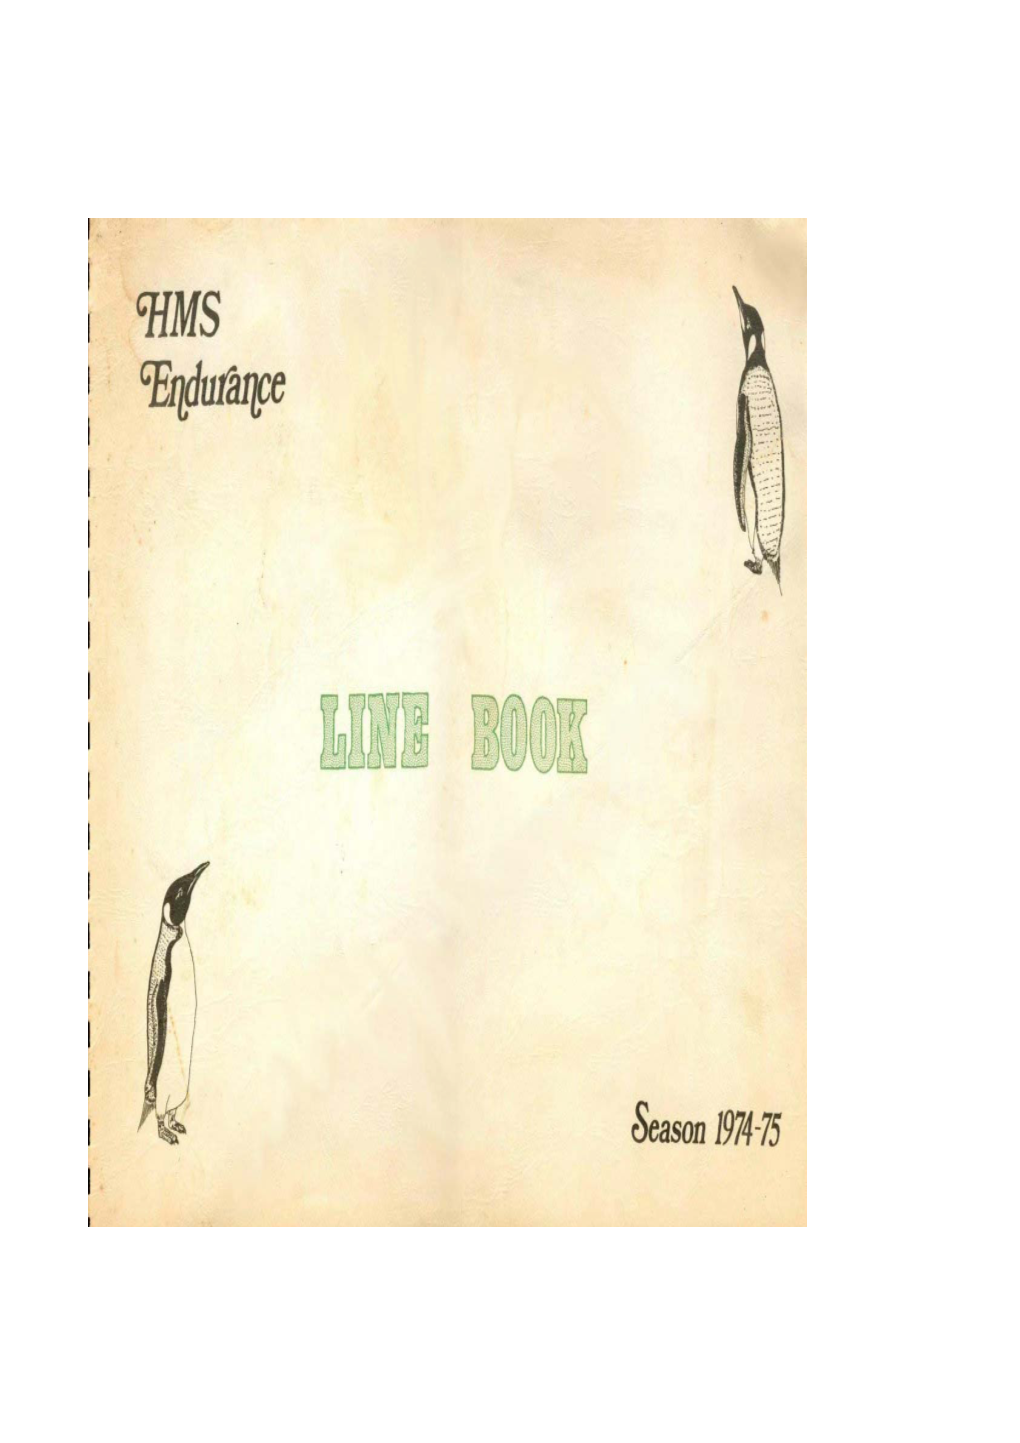 HMS Endurance Line Book Season 1974